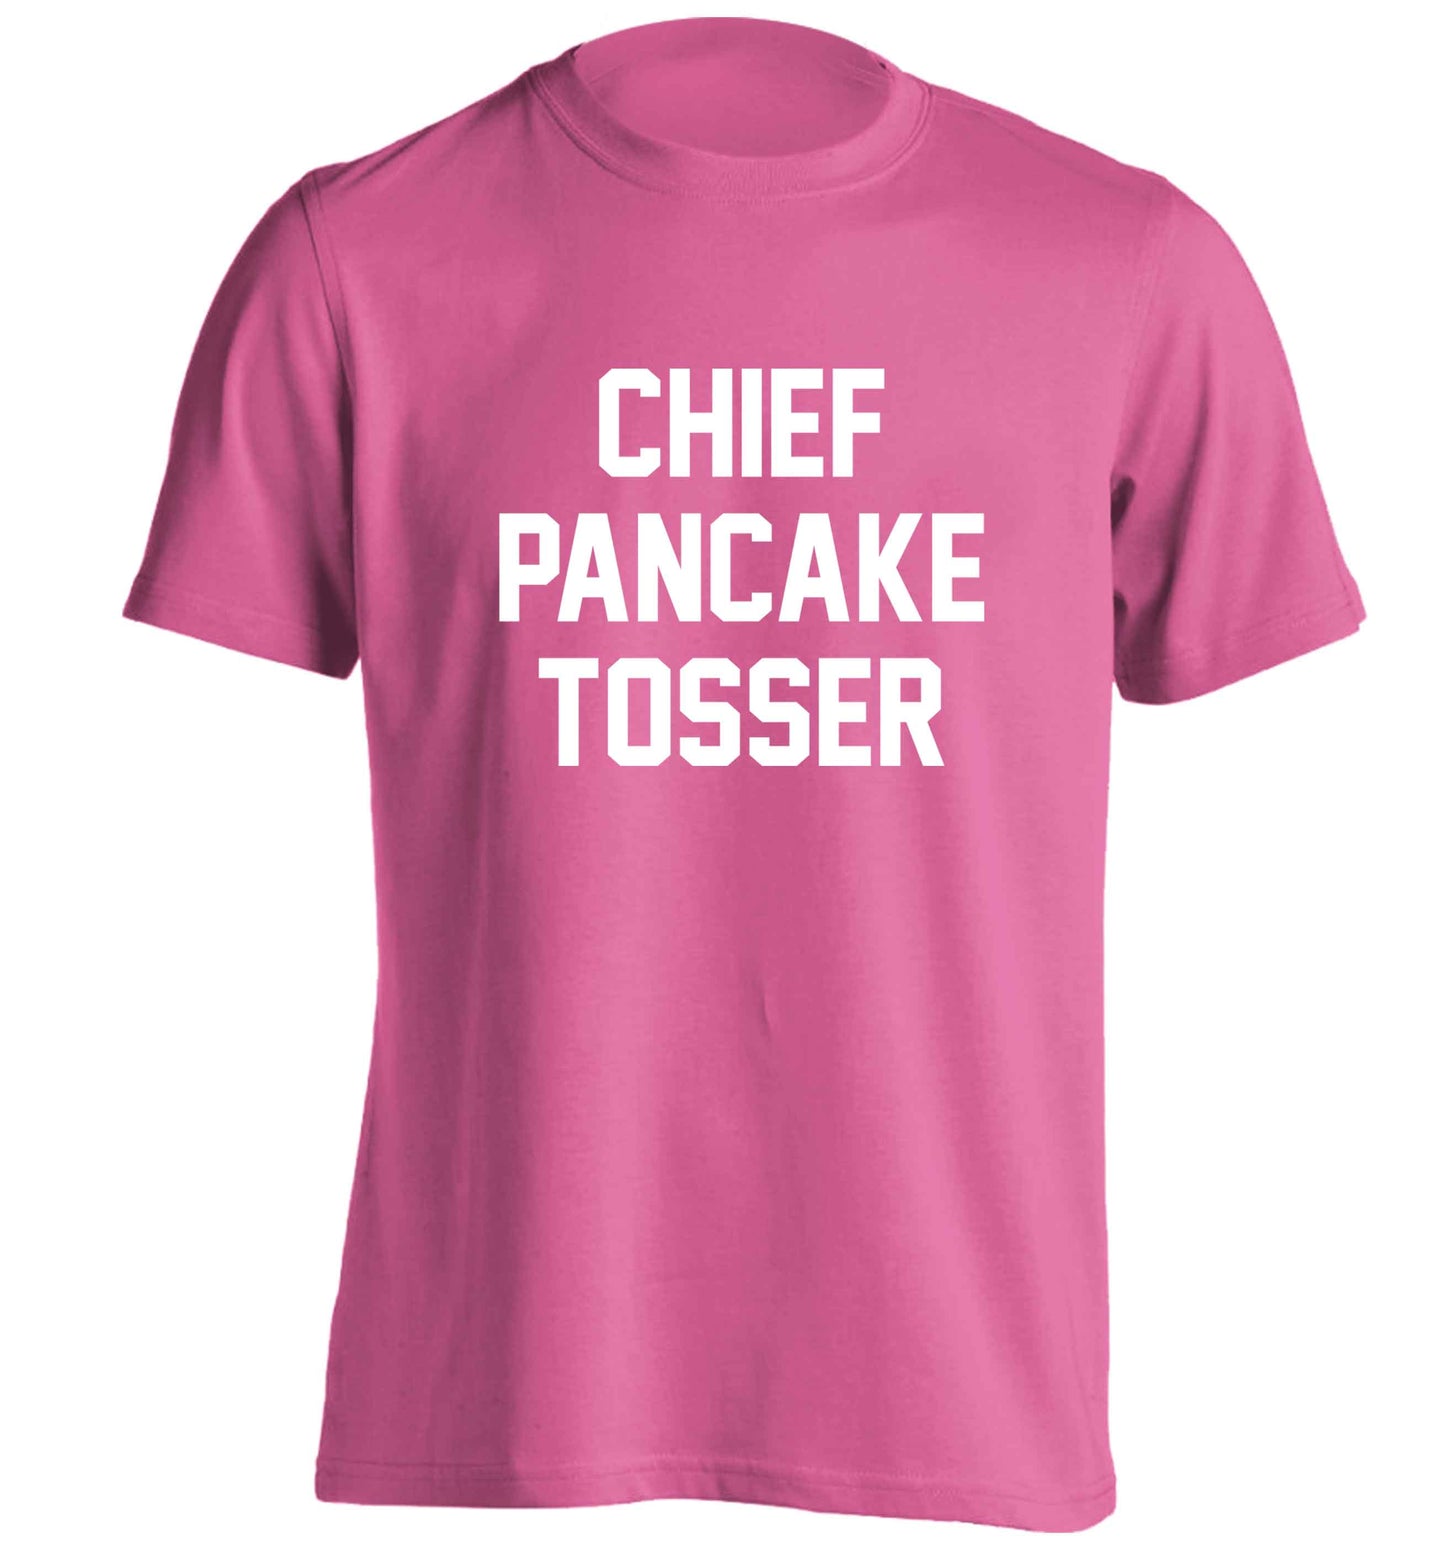 Chief pancake tosser adults unisex pink Tshirt 2XL